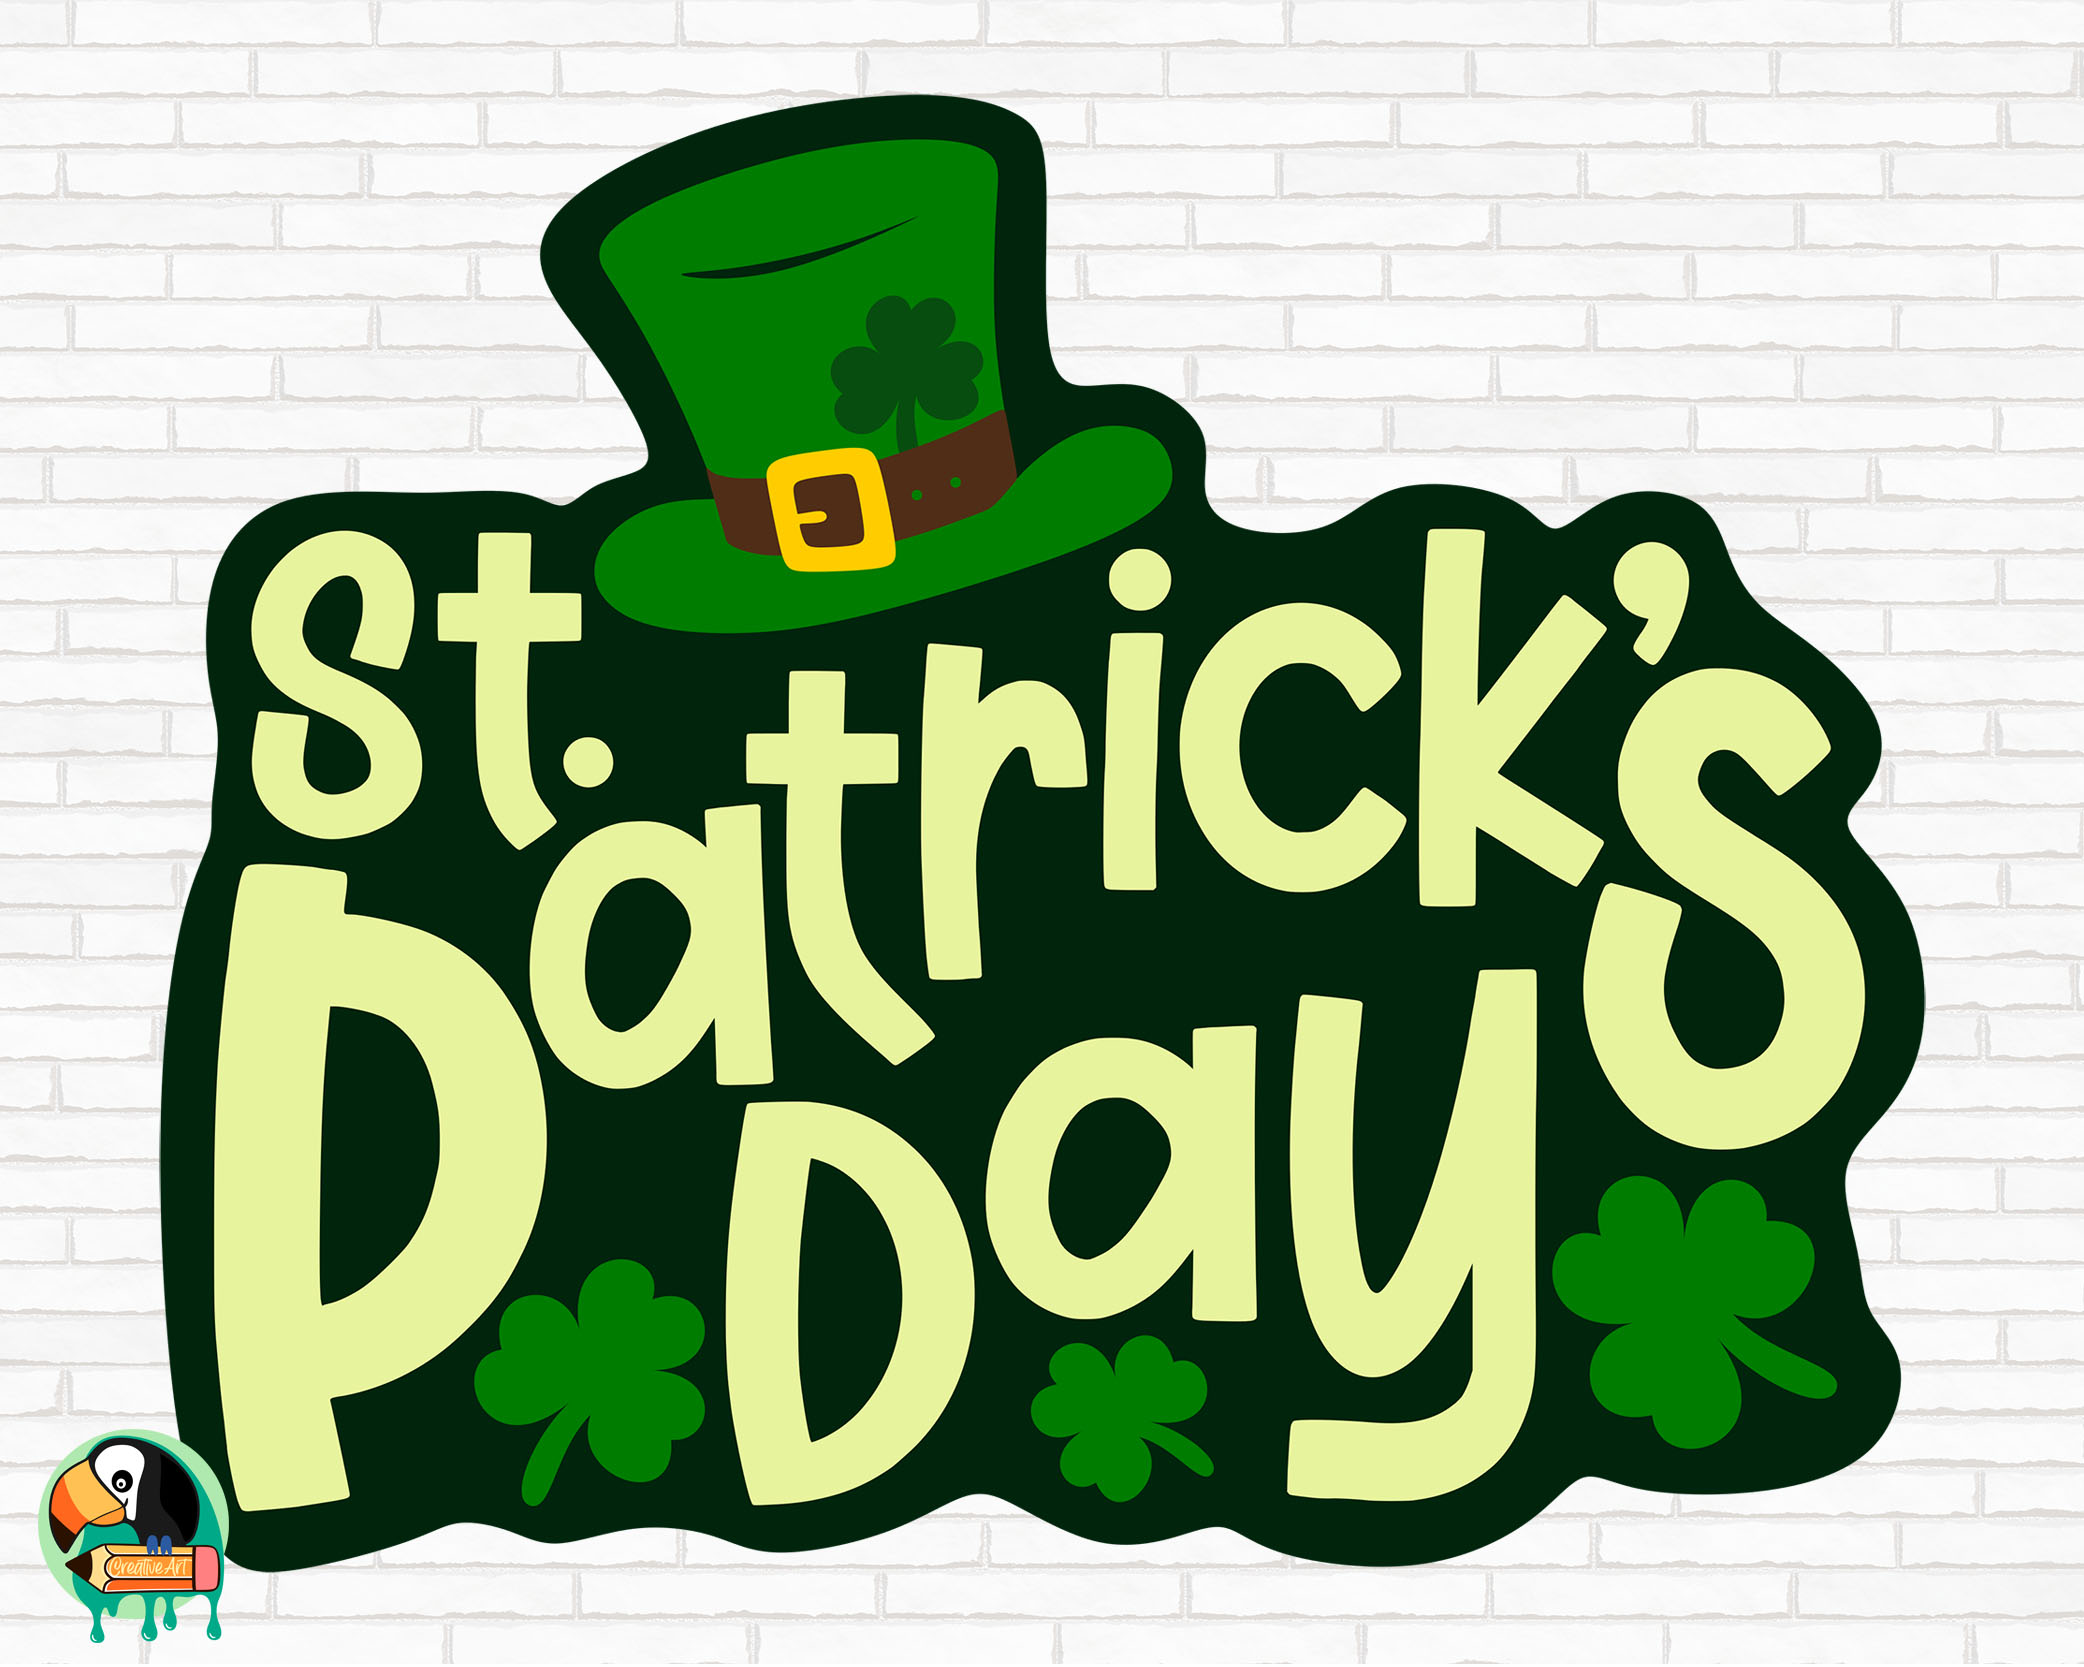 Free Happy St Patrick's Day SVG | HotSVG.com